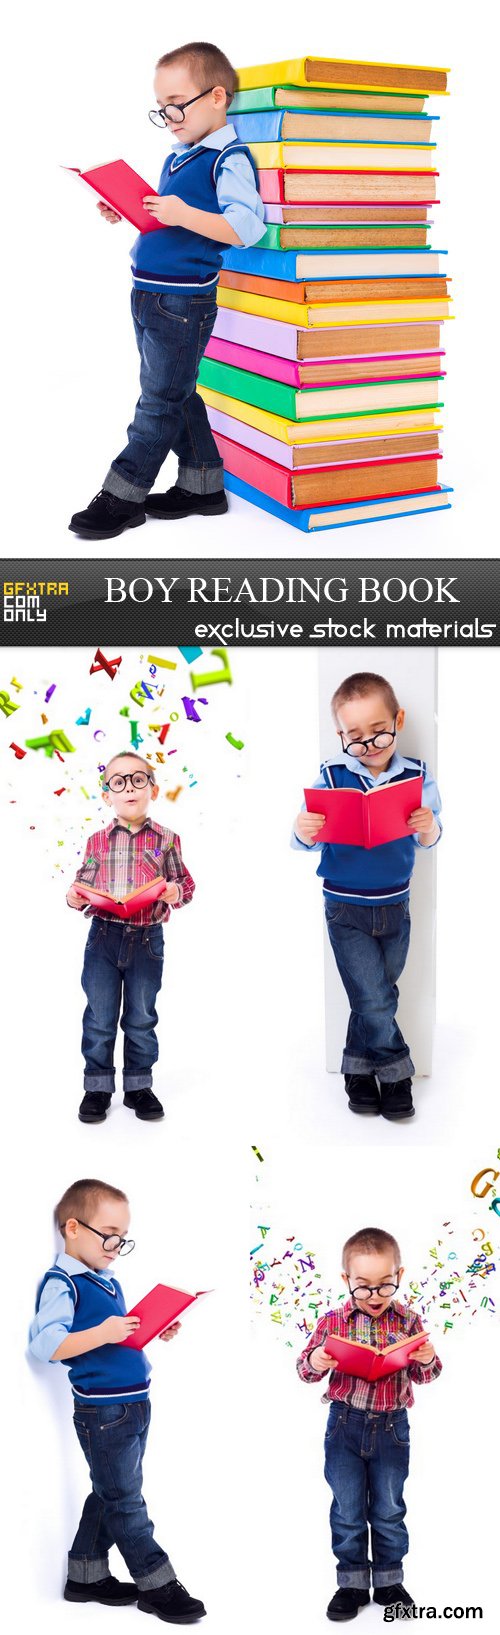 Boy Reading Book - 5 UHQ JPEG